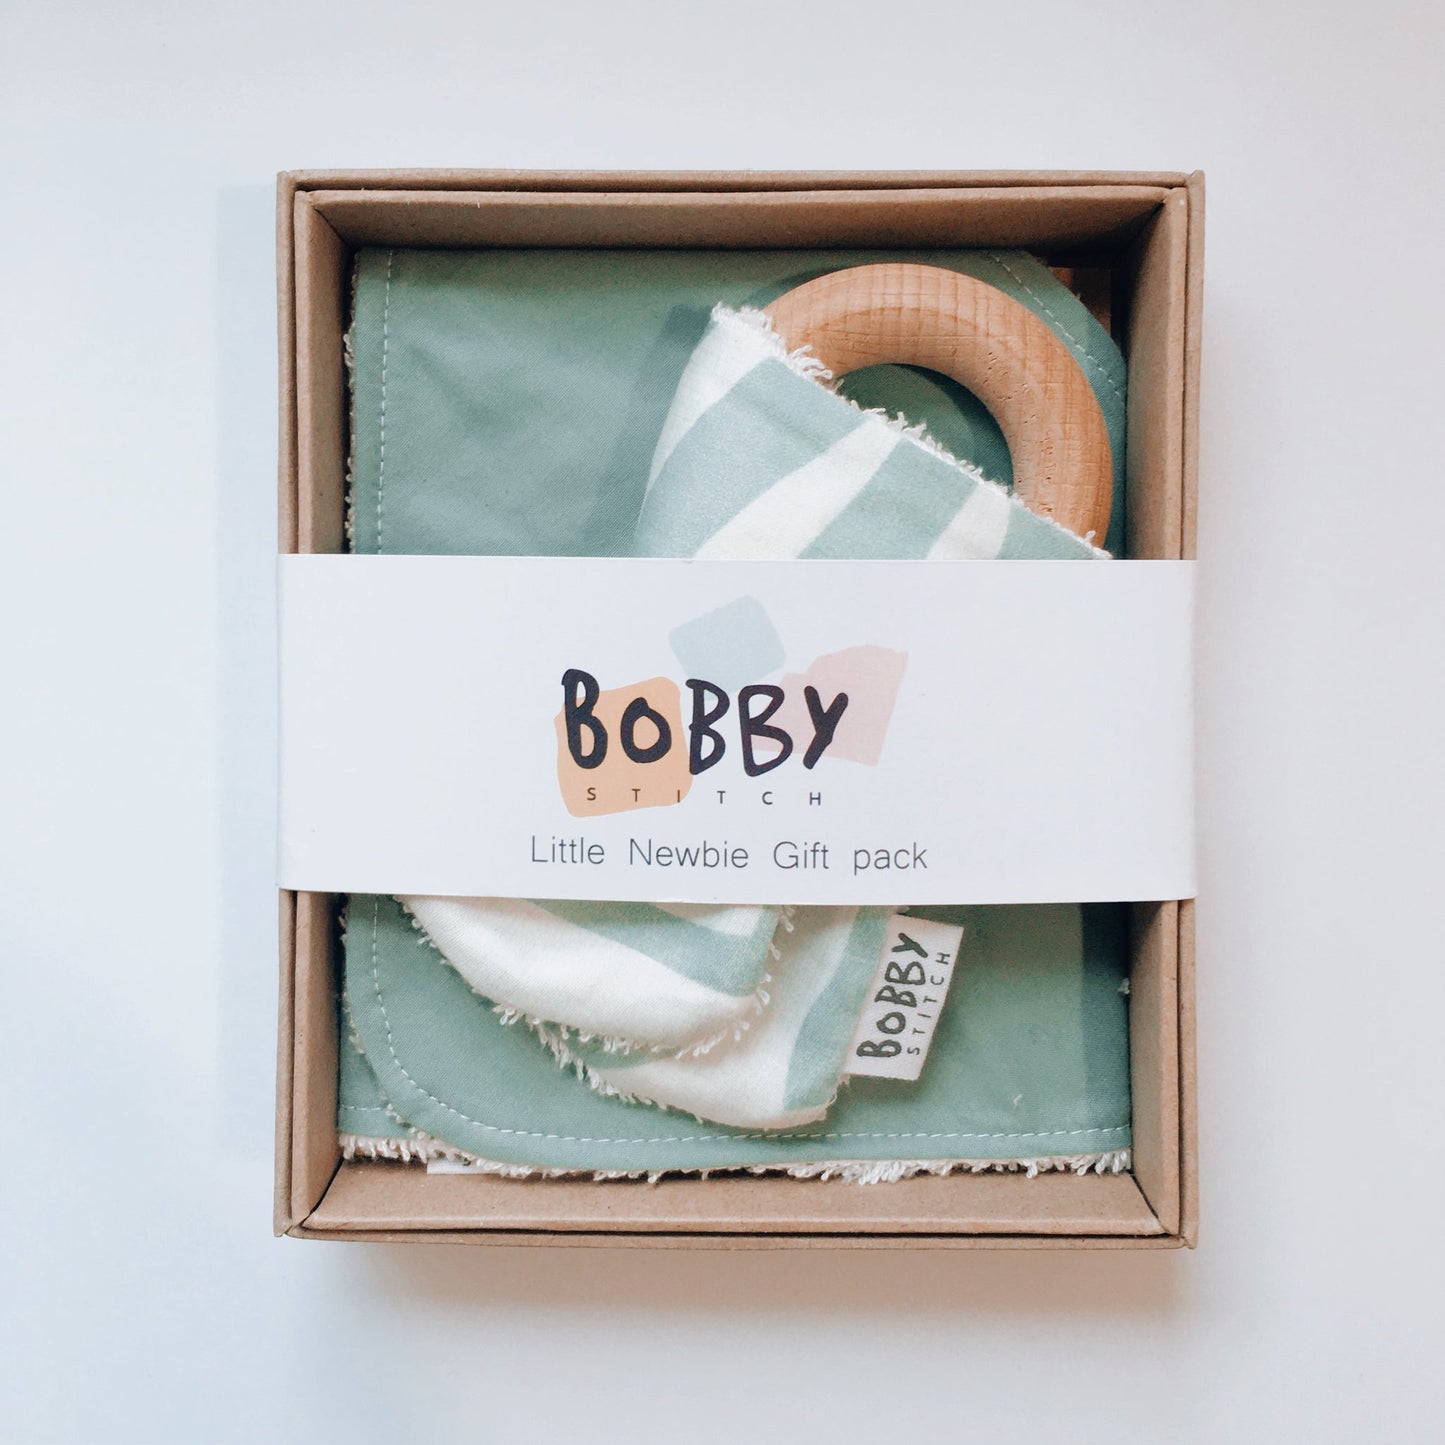 Bobby Stitch Little Newbie Baby Gift Pack